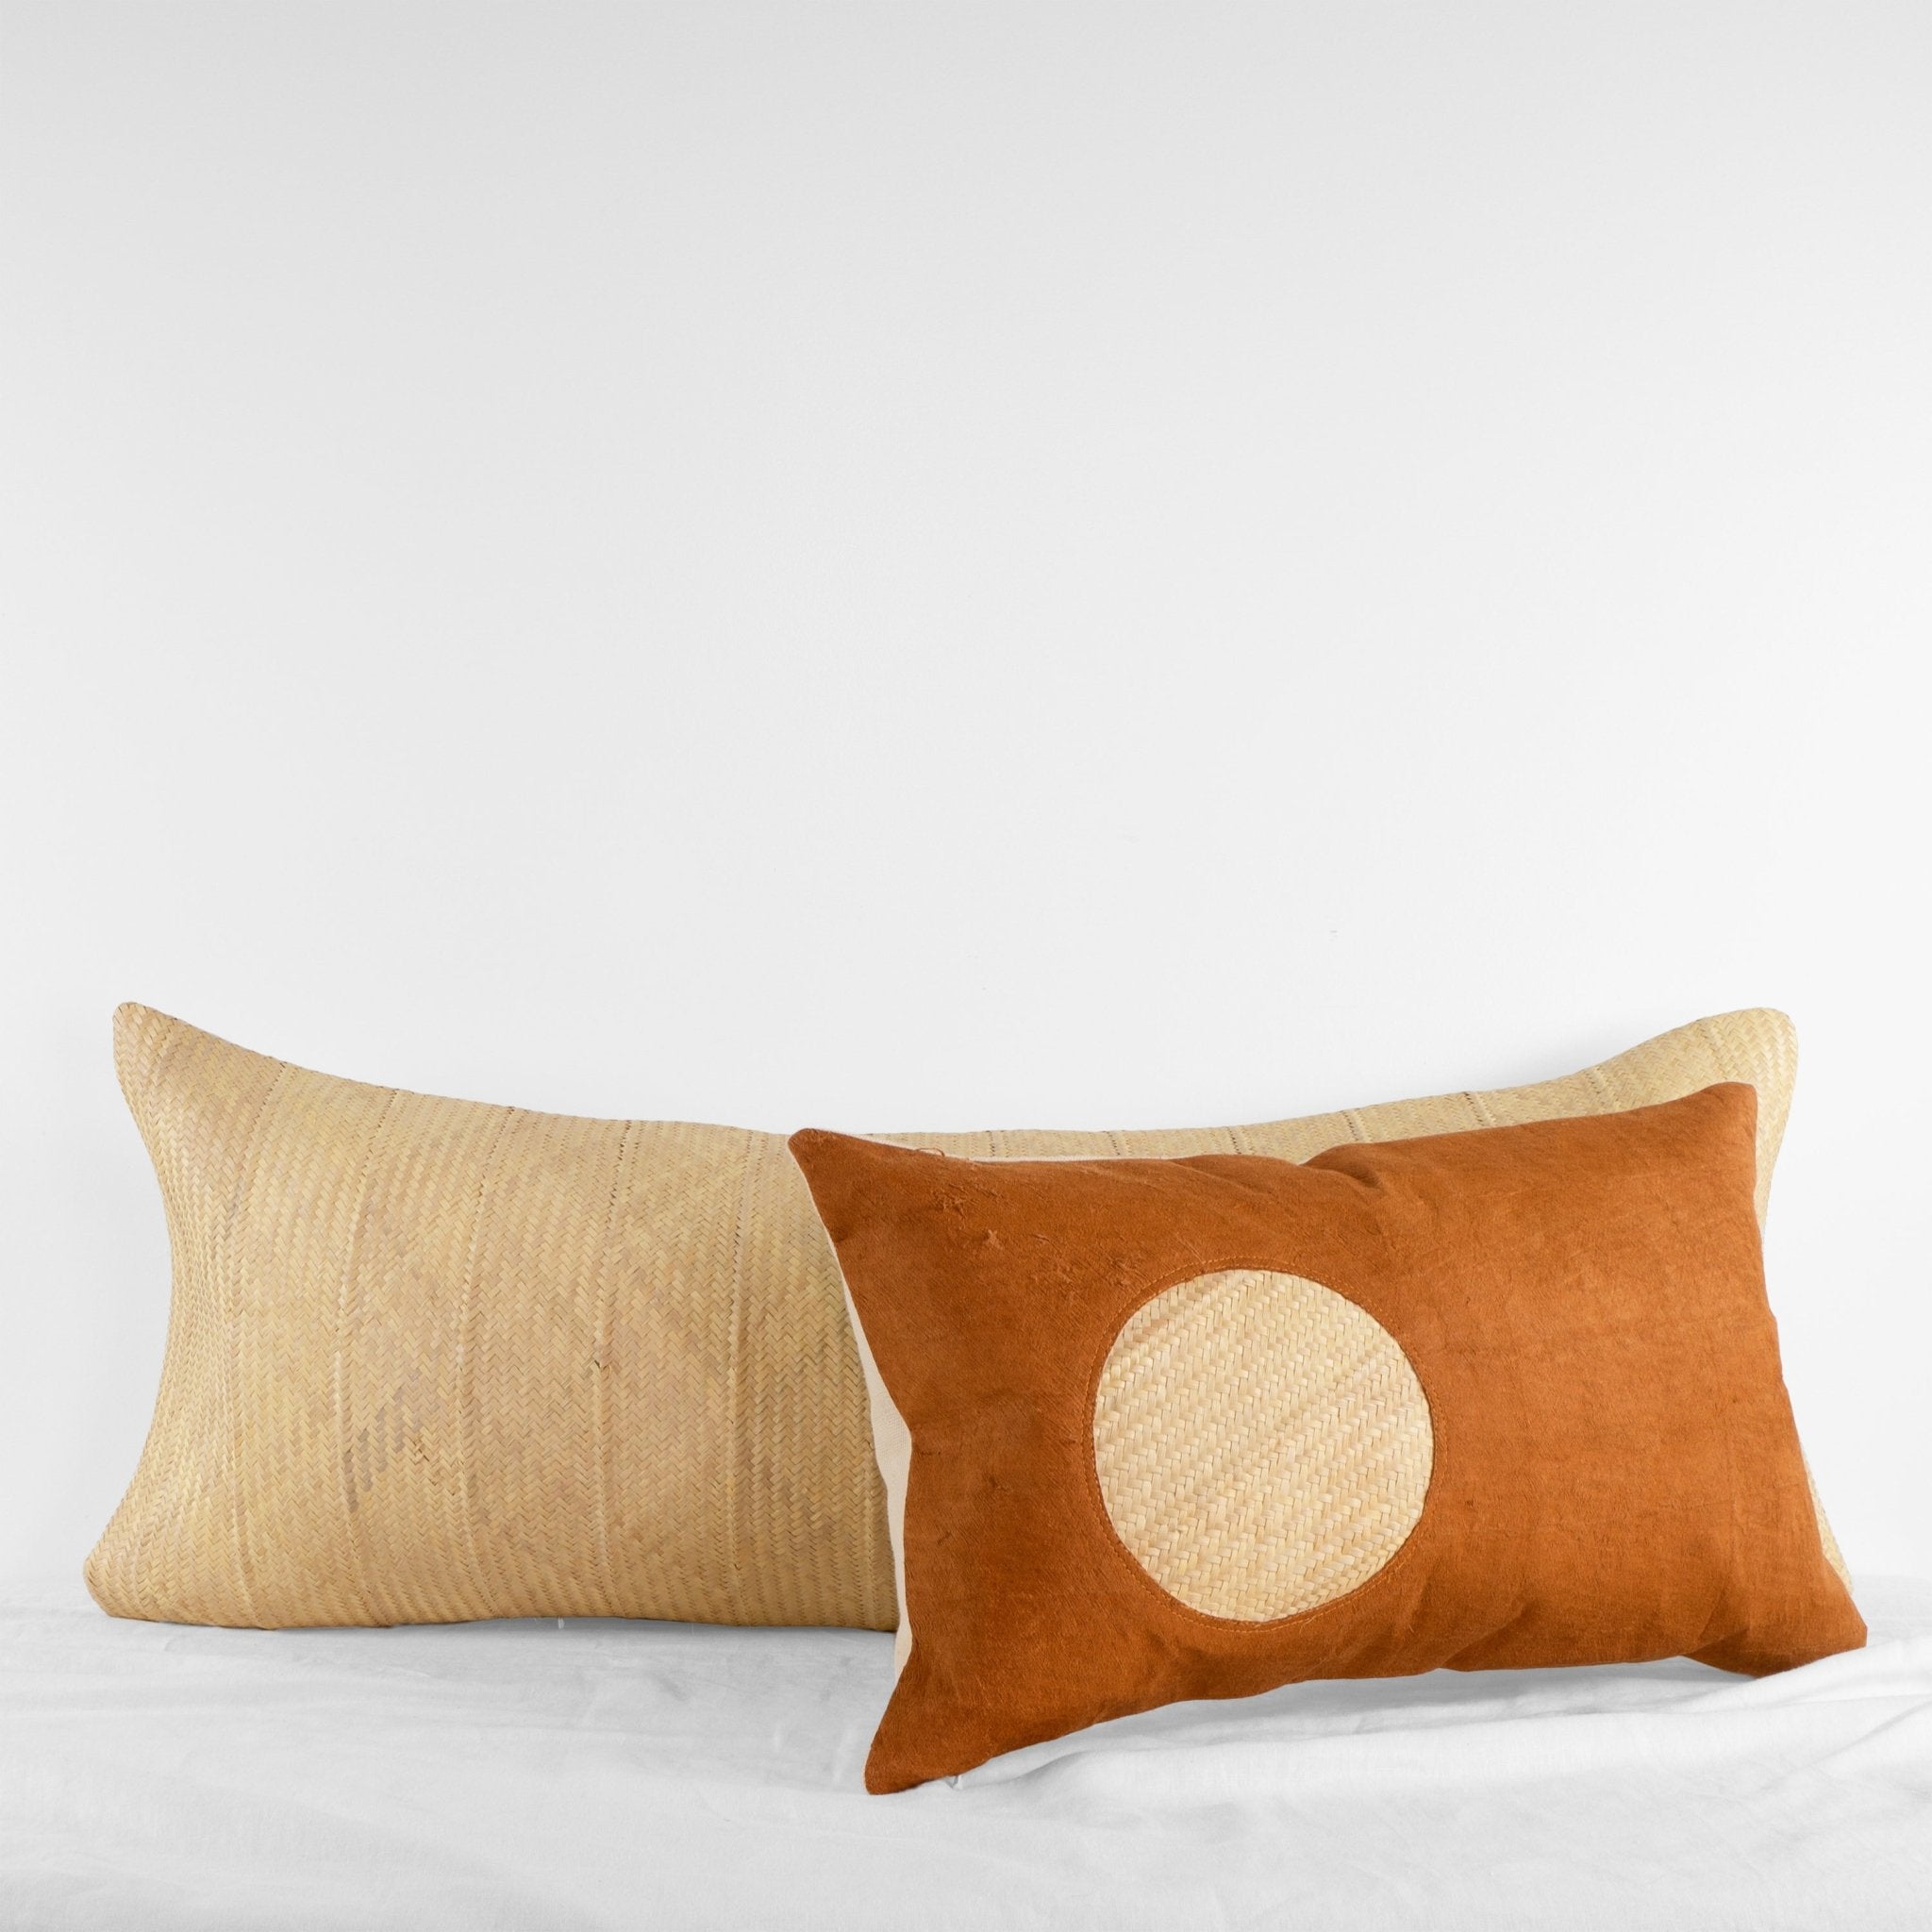 Handwoven natural palm leaf oversized lumbar cushion and barkcloth lumbar throw cushion from Uganda